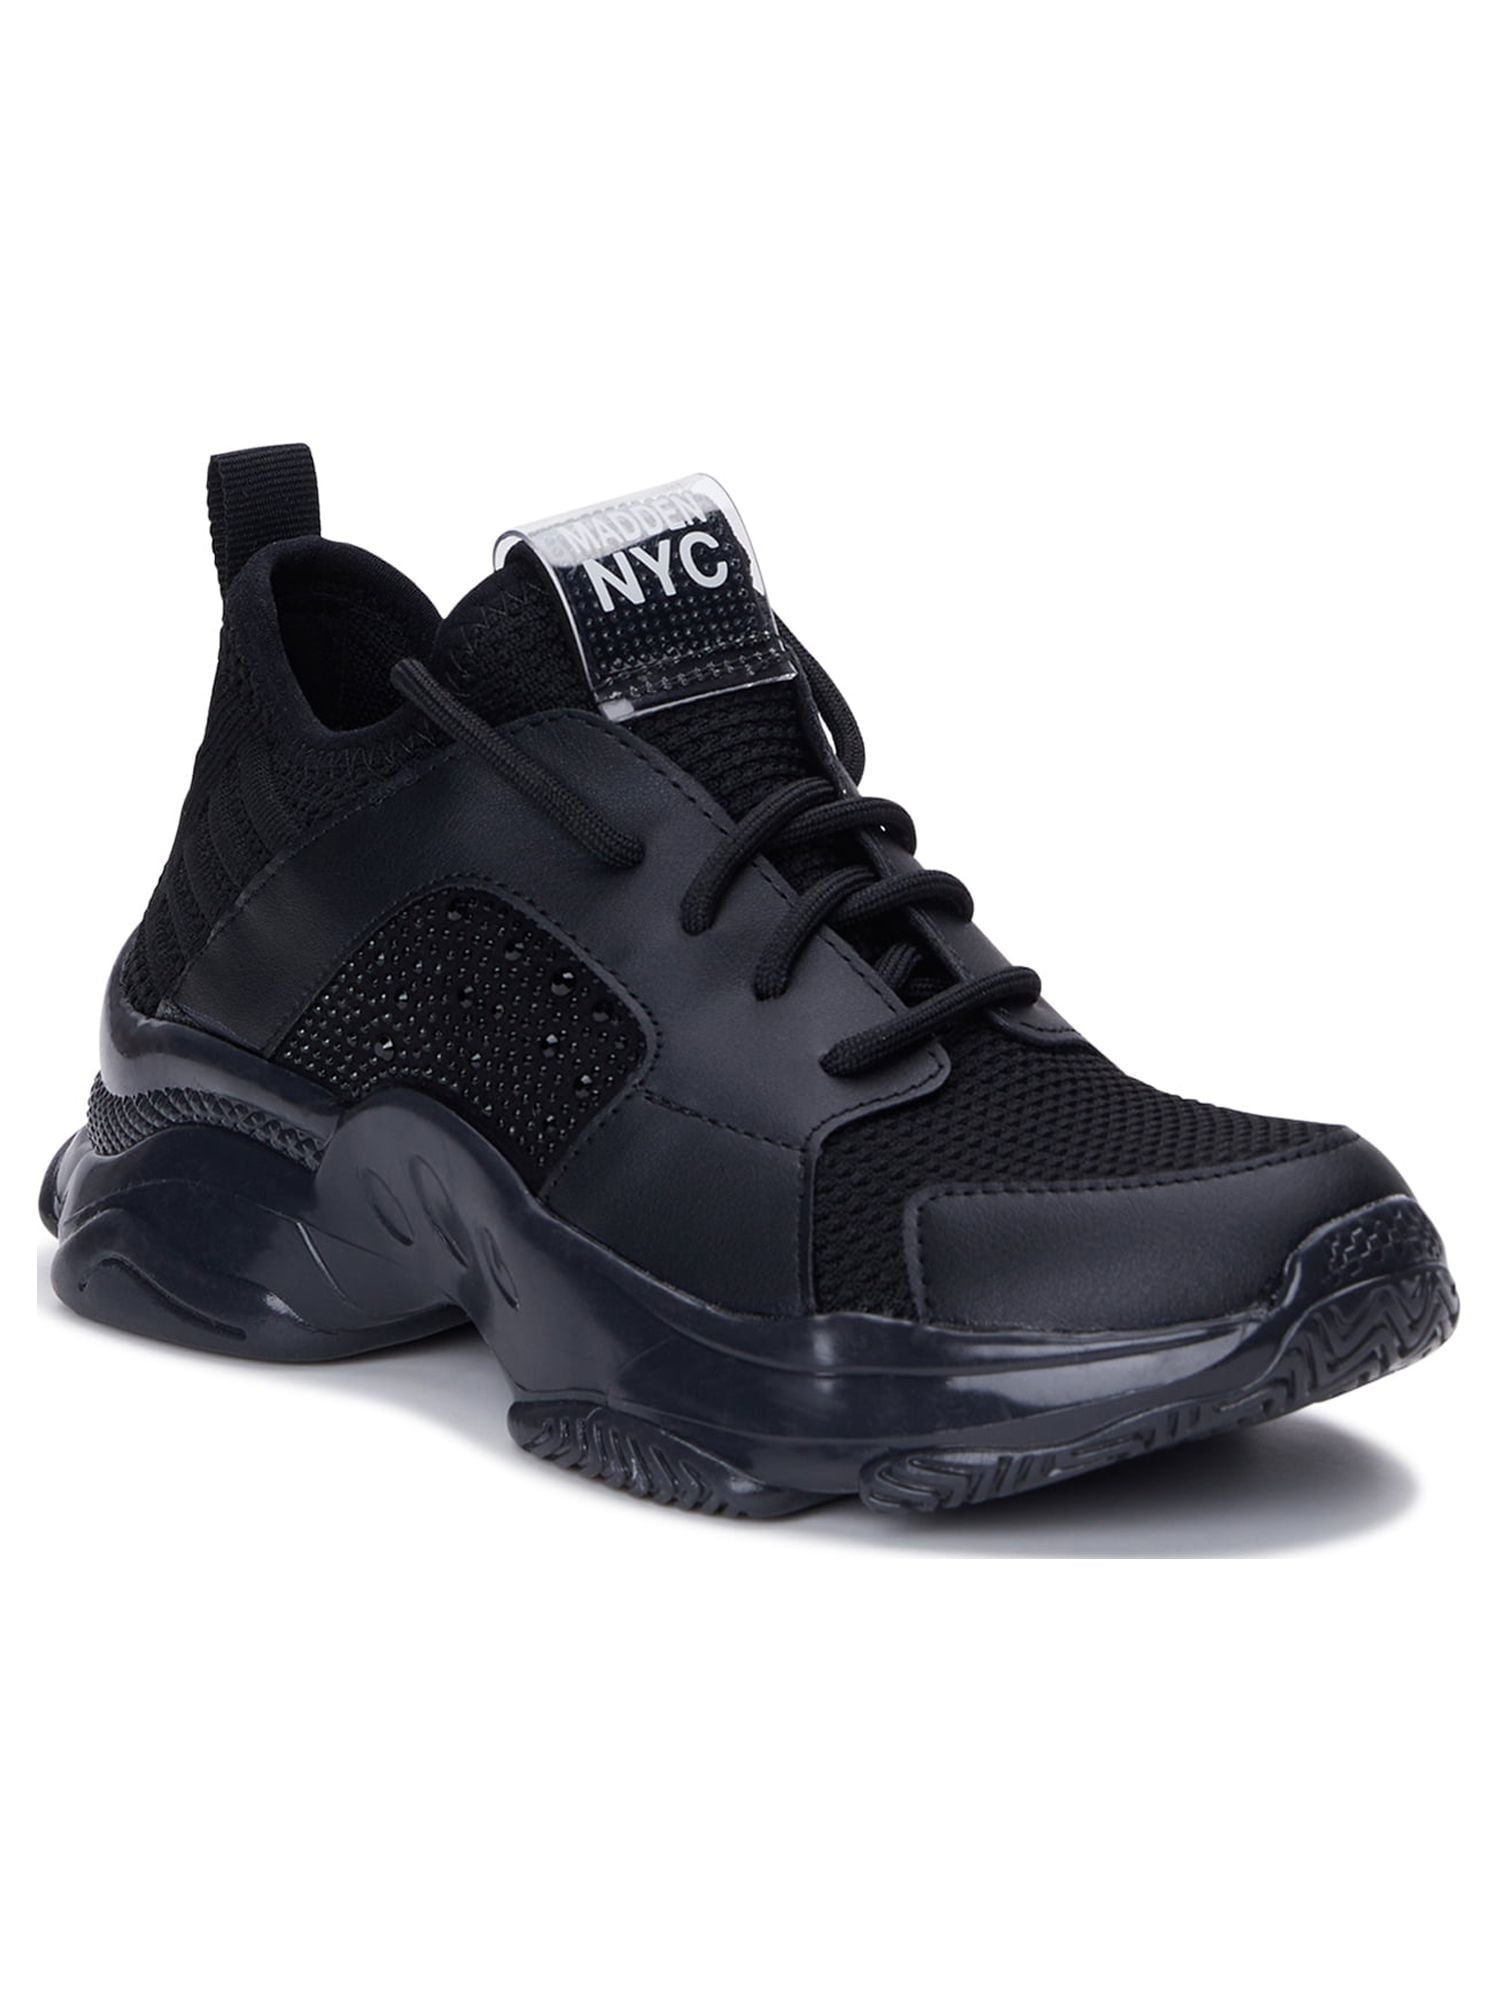 FOOT SHINE - Versace ' Men's Chain reaction sneakers Black